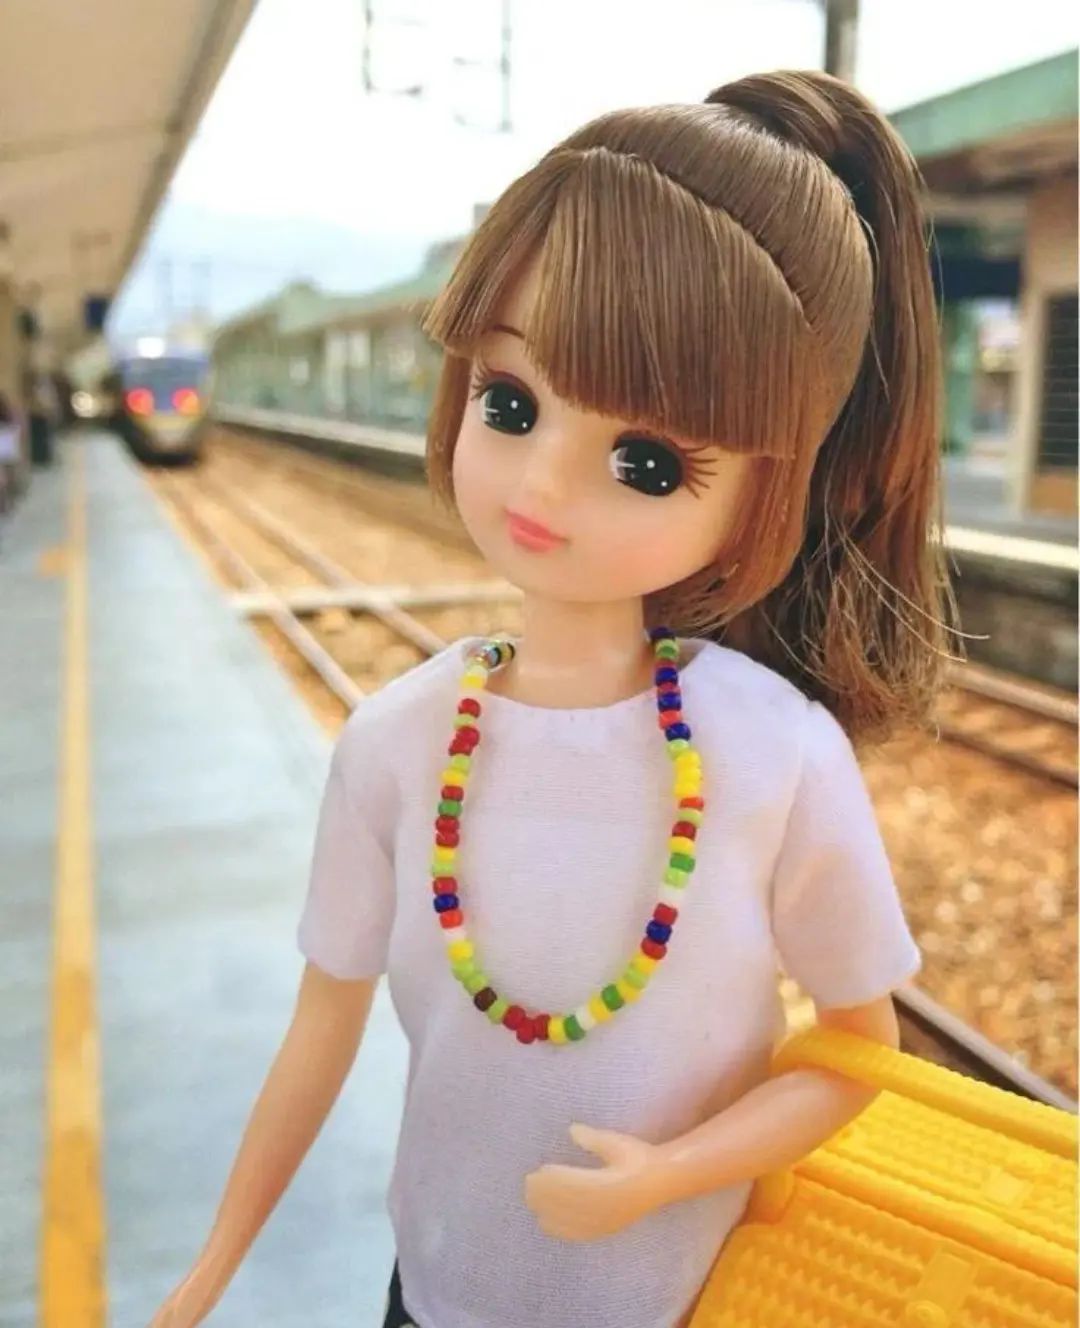 Doll Instagram profile picture